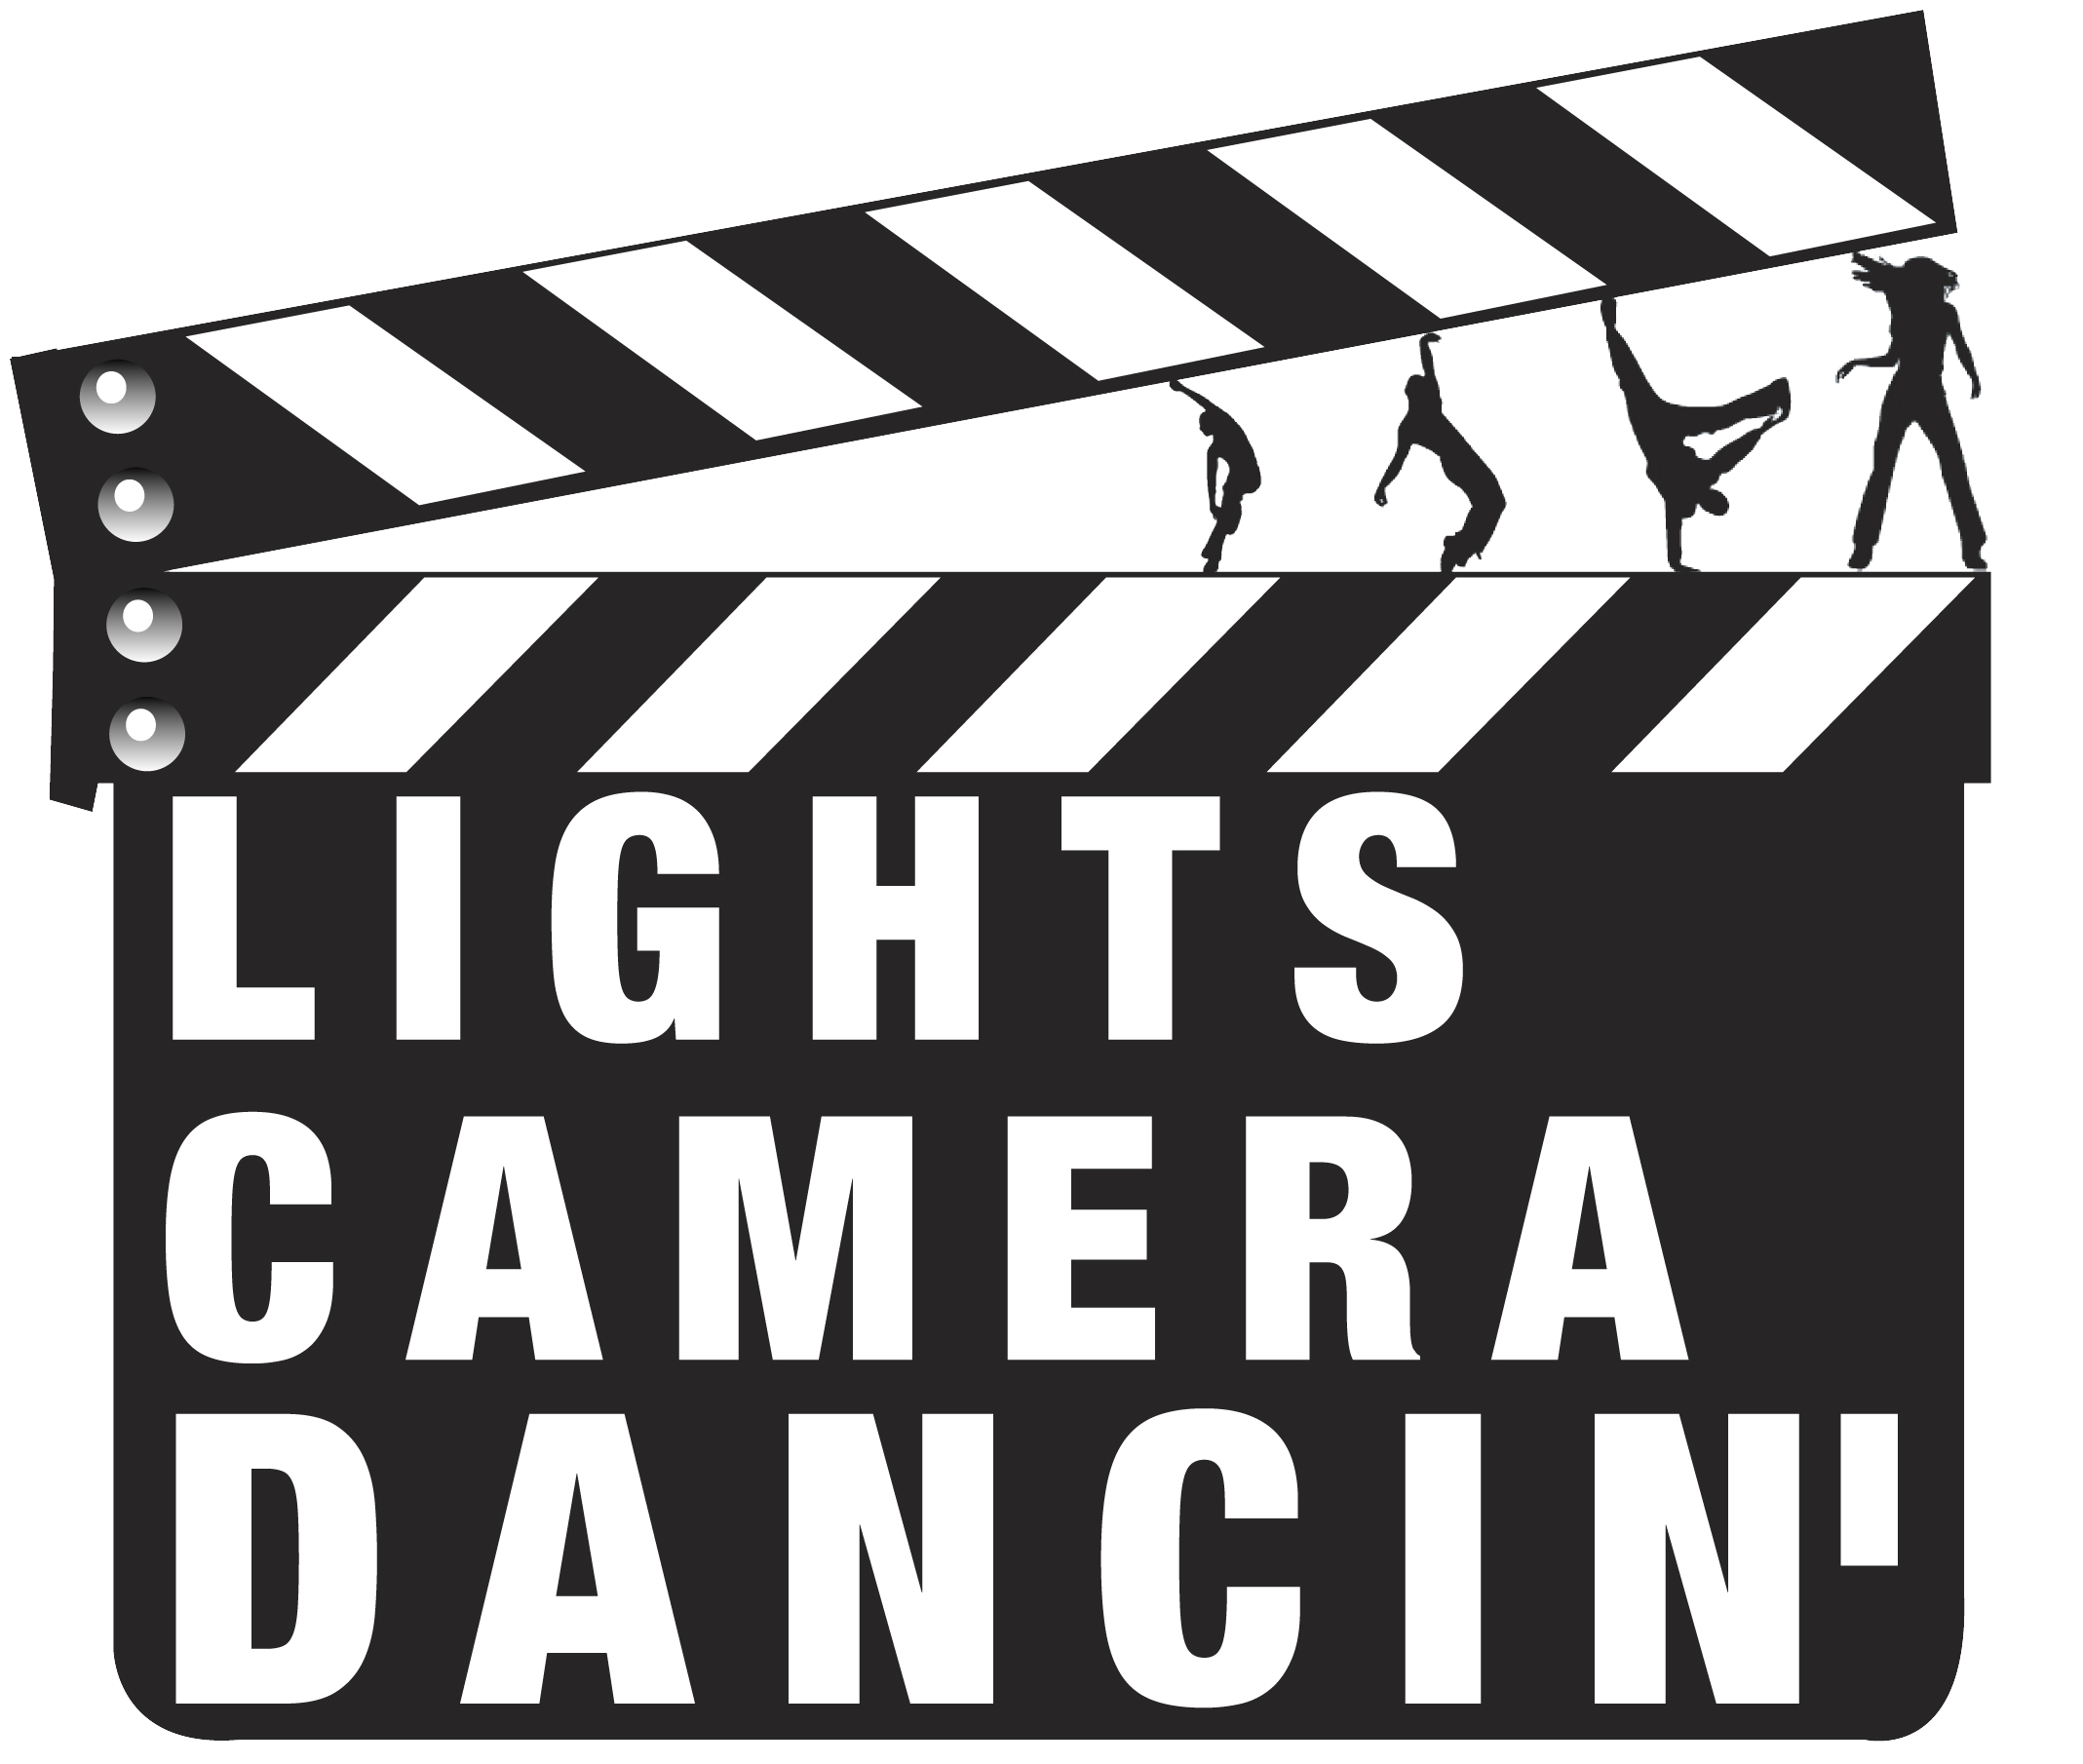 Lights, Camera, Dancin'